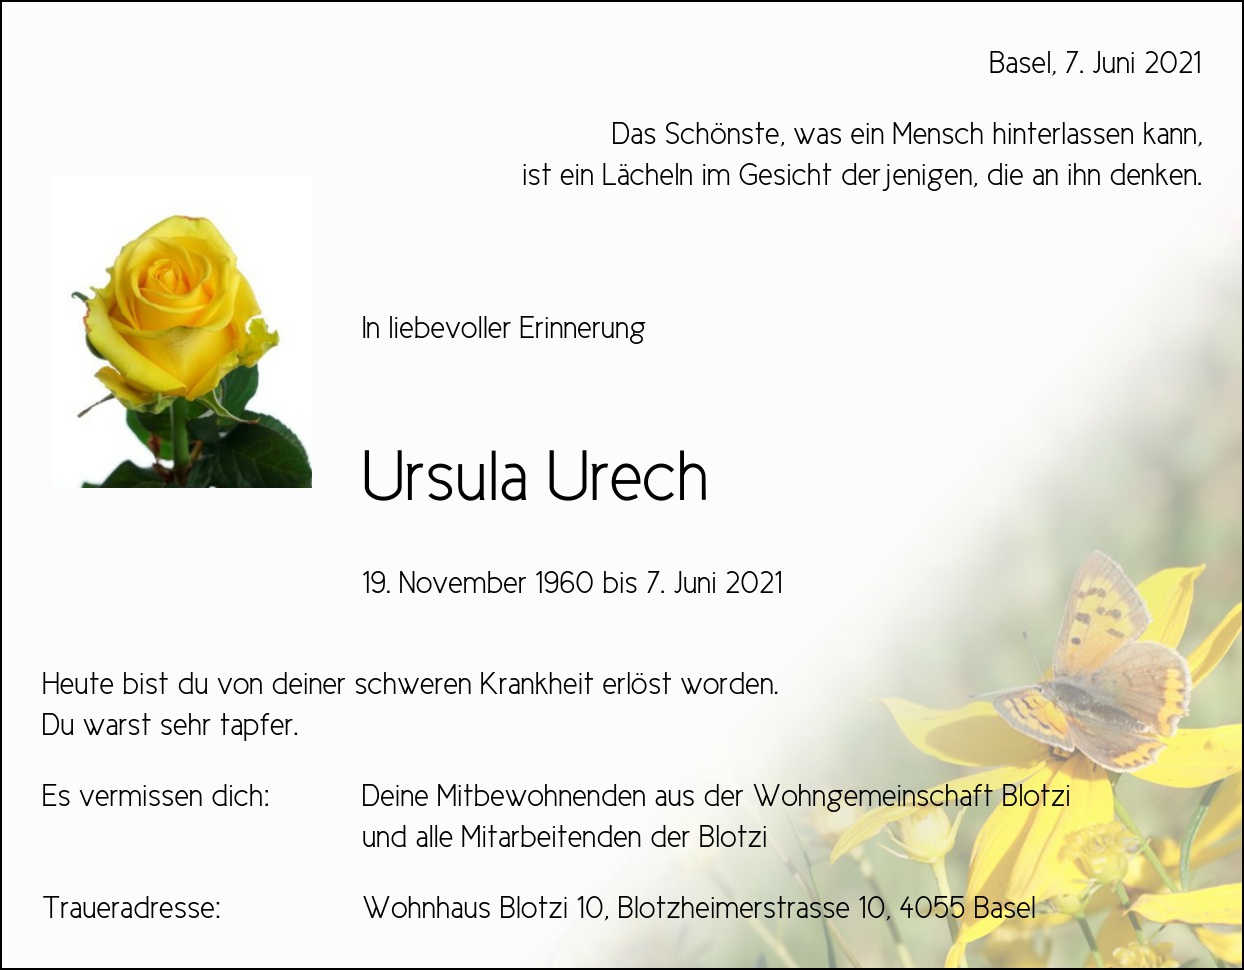 Ursula Urech